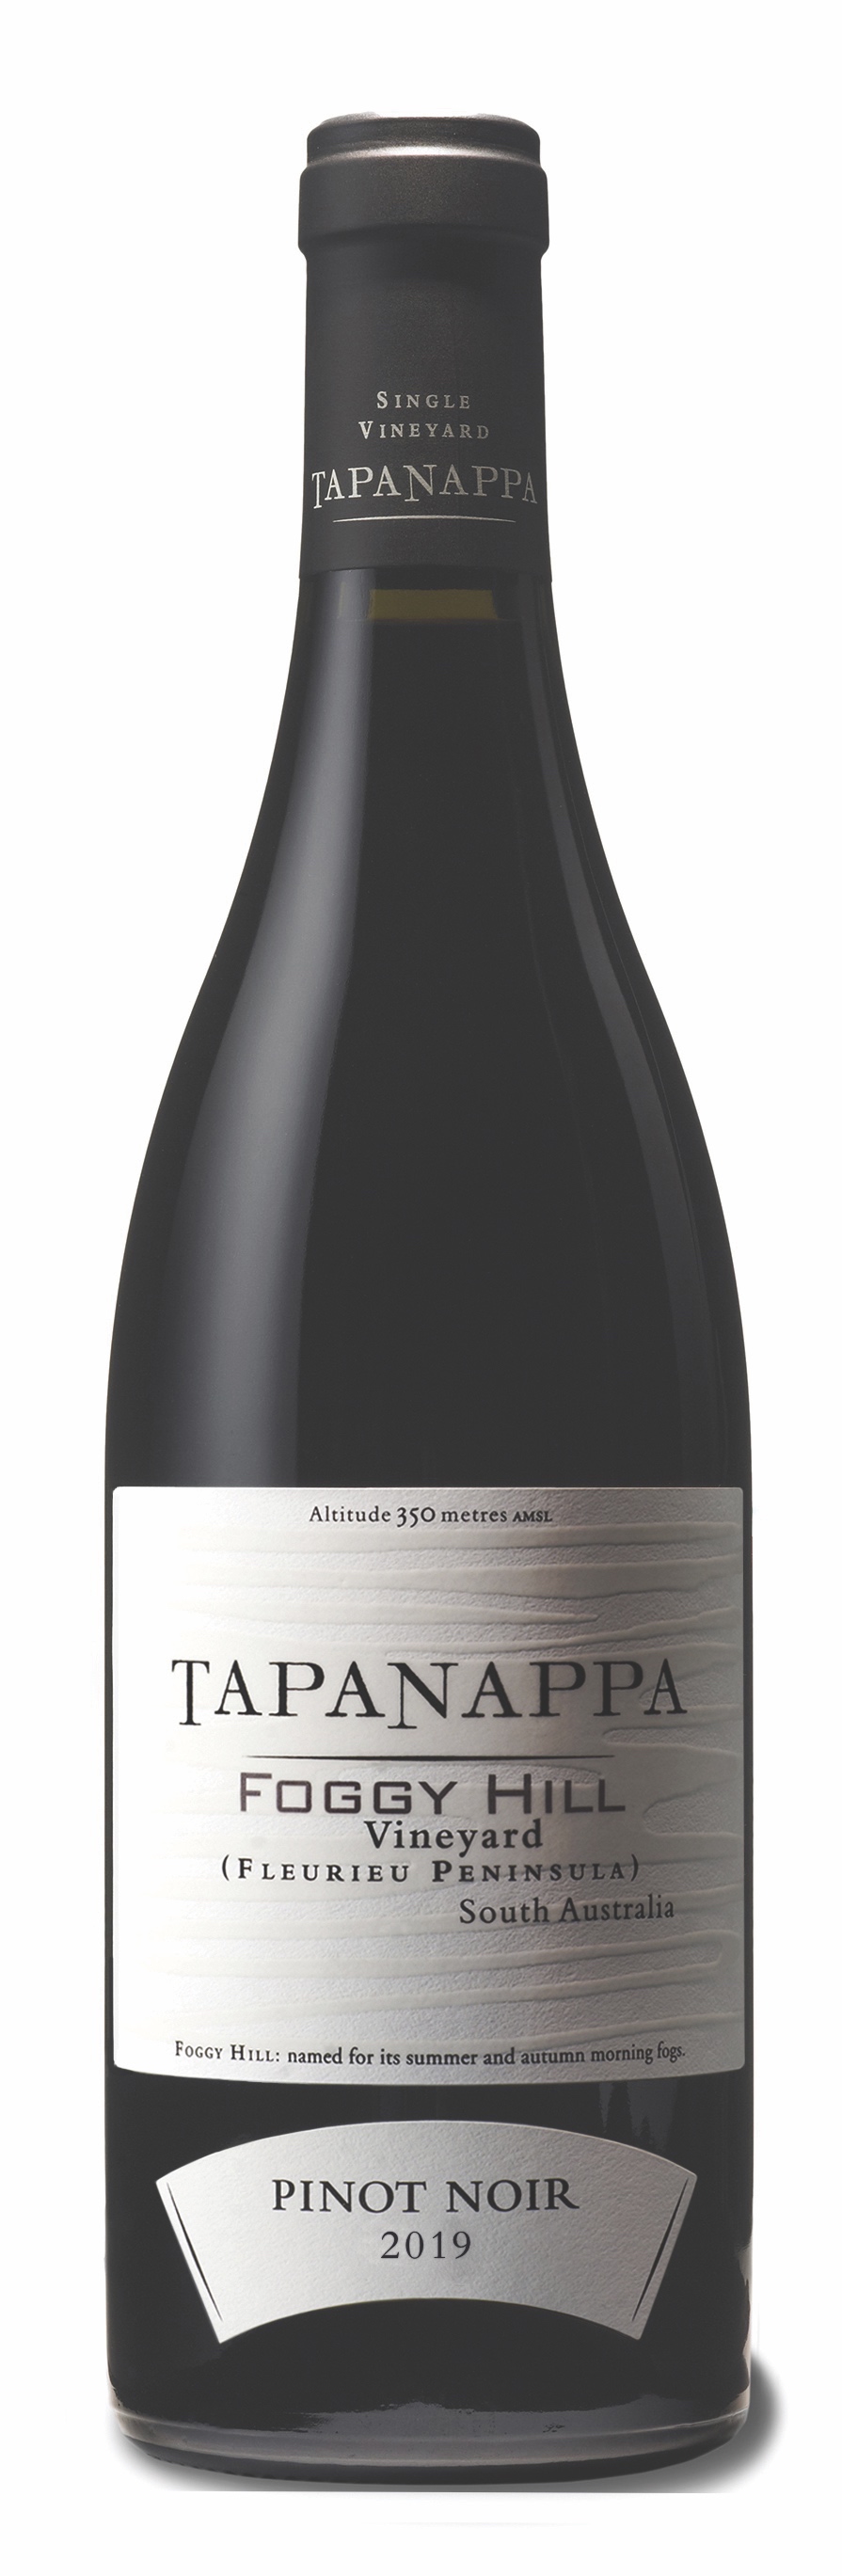 Tapanappa Foggy Hill Vineyard 2019 Pinot Noir bottleshot